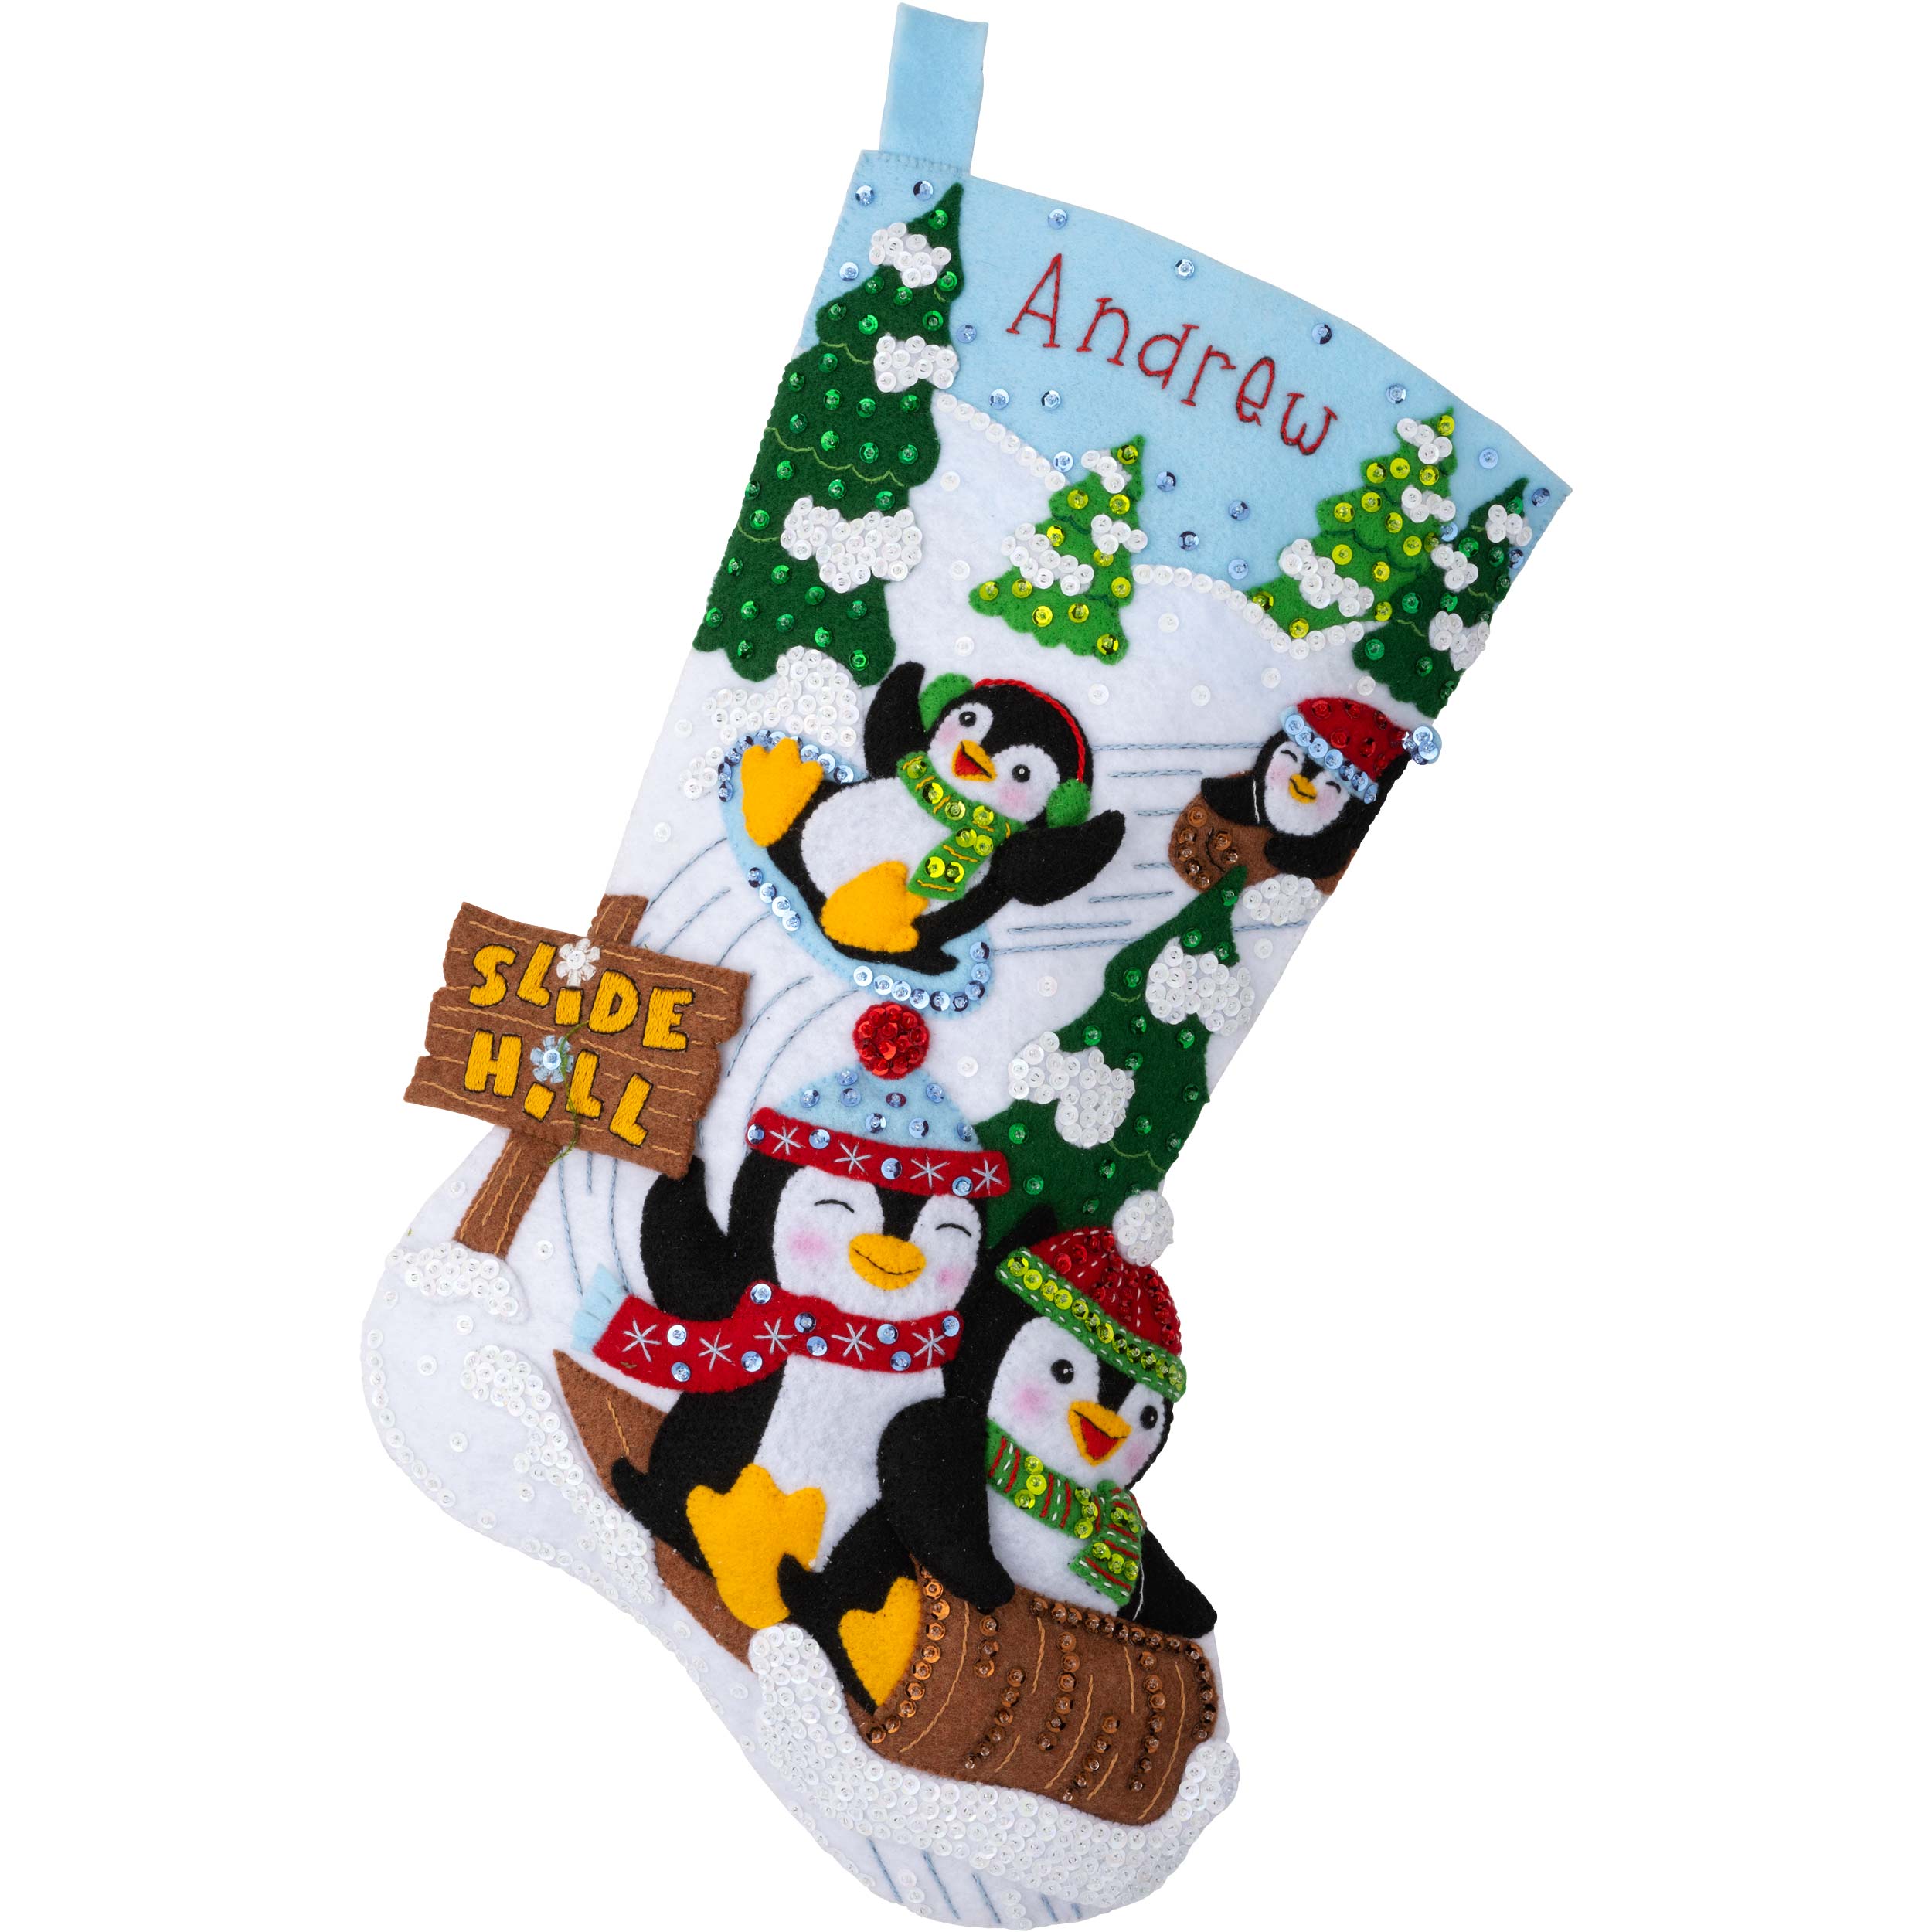 Bucilla ® Seasonal - Felt - Stocking Kits - Penguins at Play - 89481E